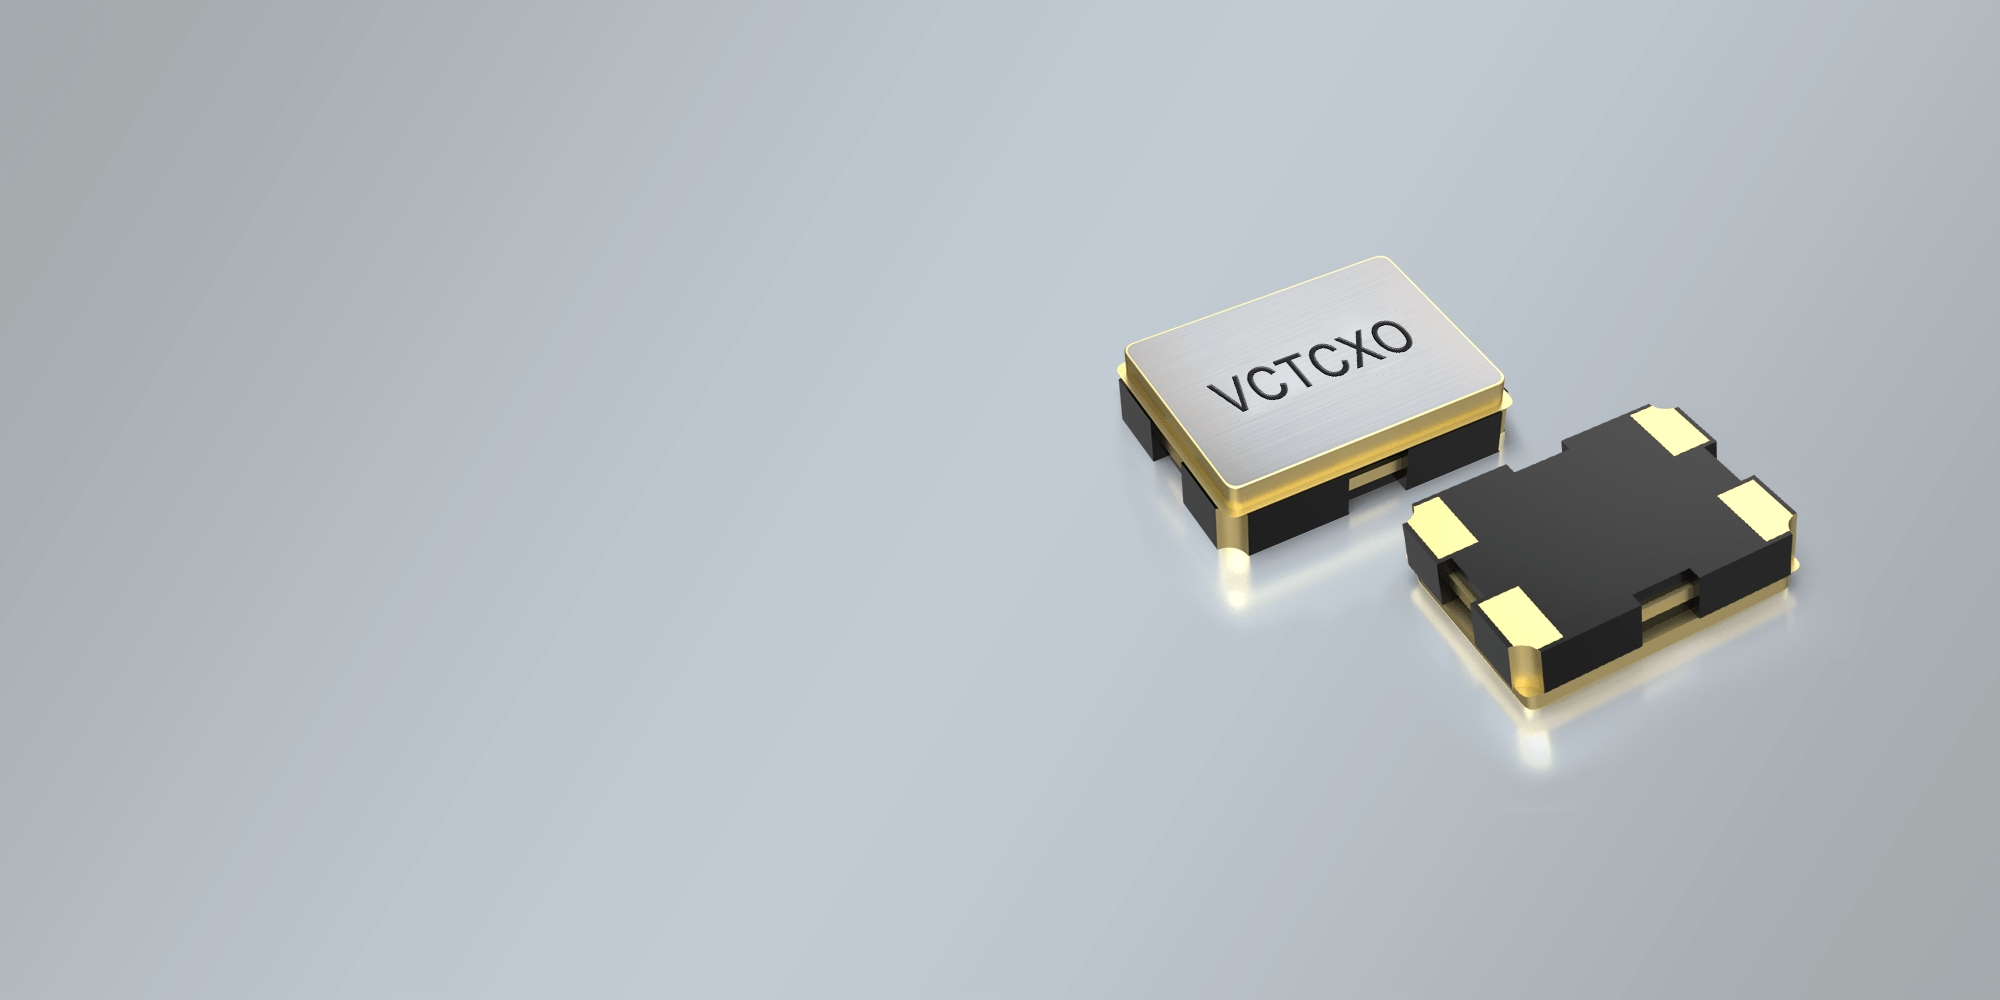 SMD VCTCXO OSCILLATOR 3.2 x 2.5 mm 9.6 - 52.0 MHz